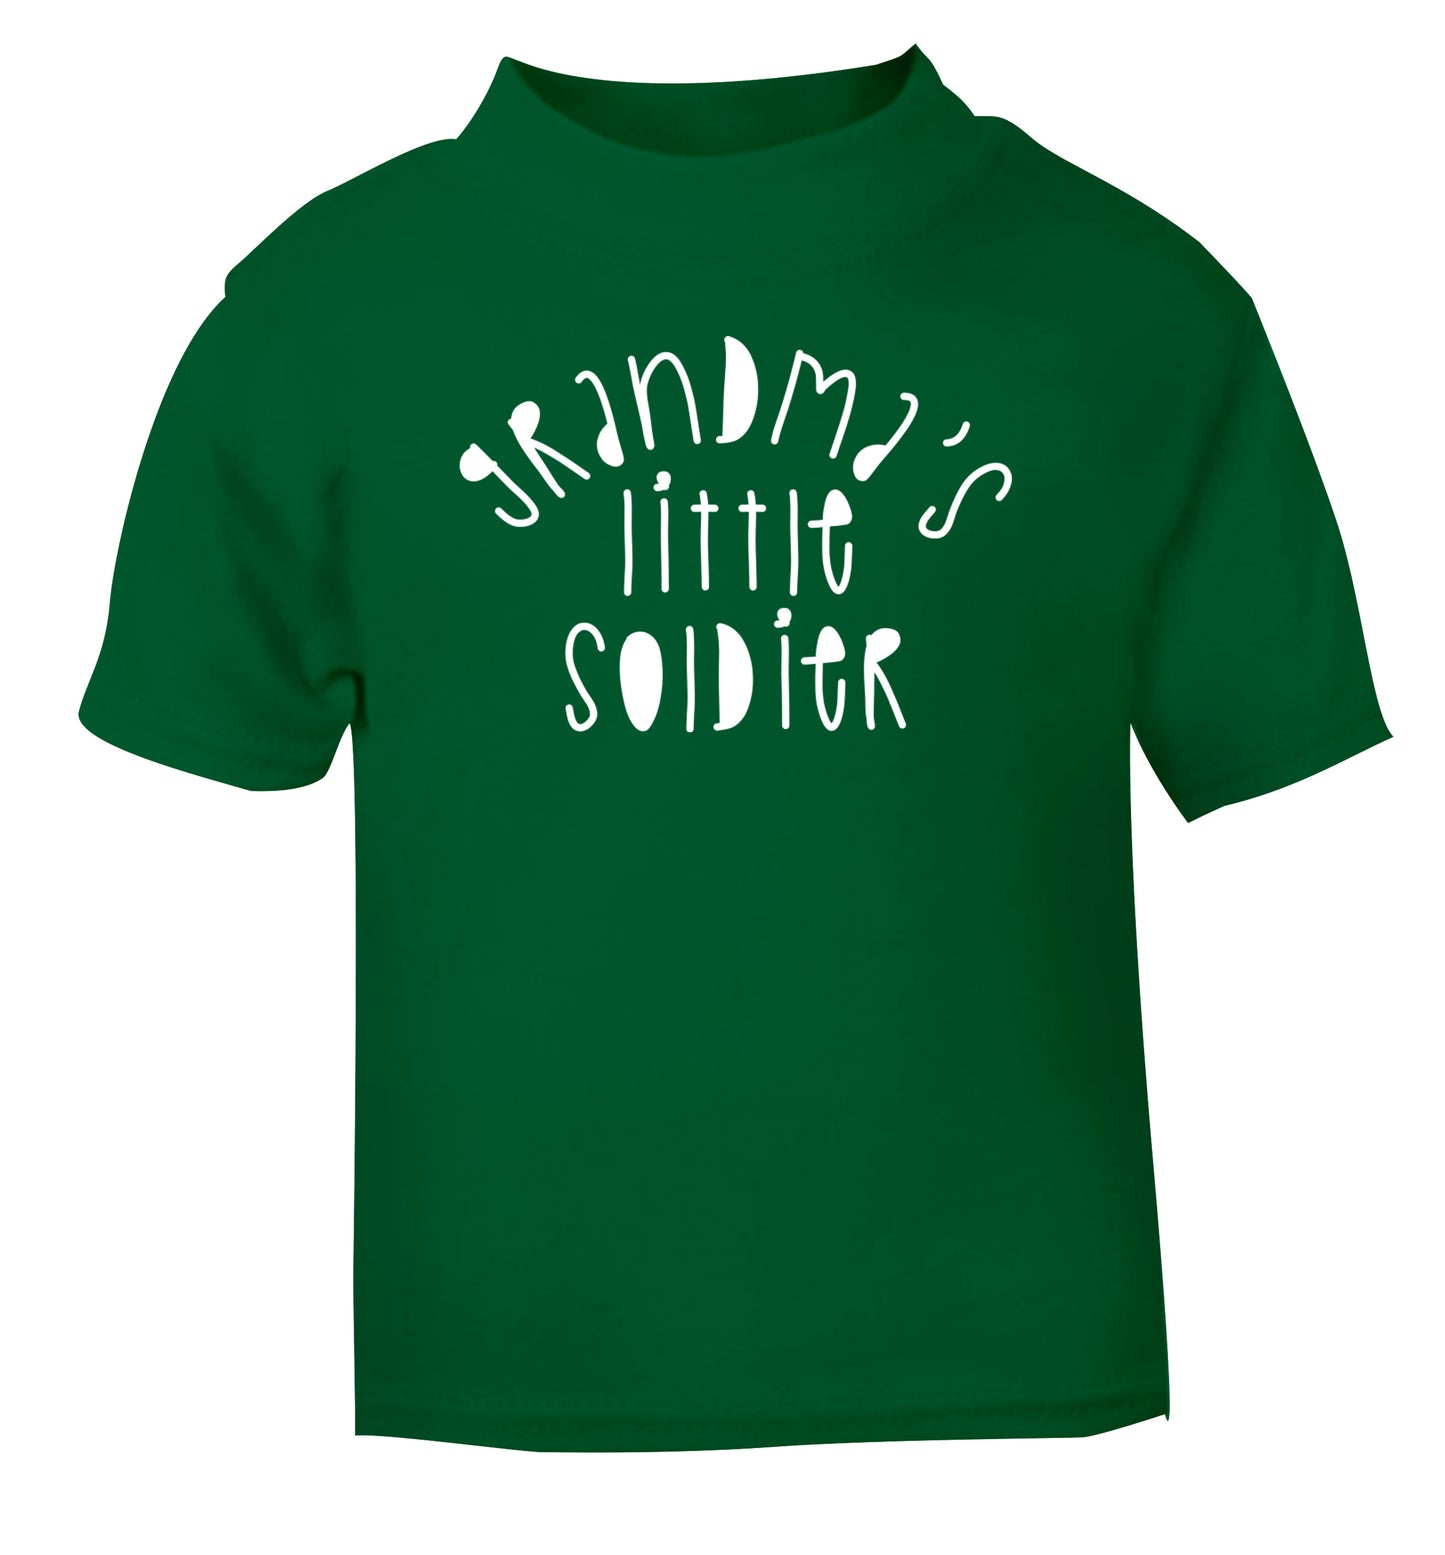 Grandma's little soldier green Baby Toddler Tshirt 2 Years